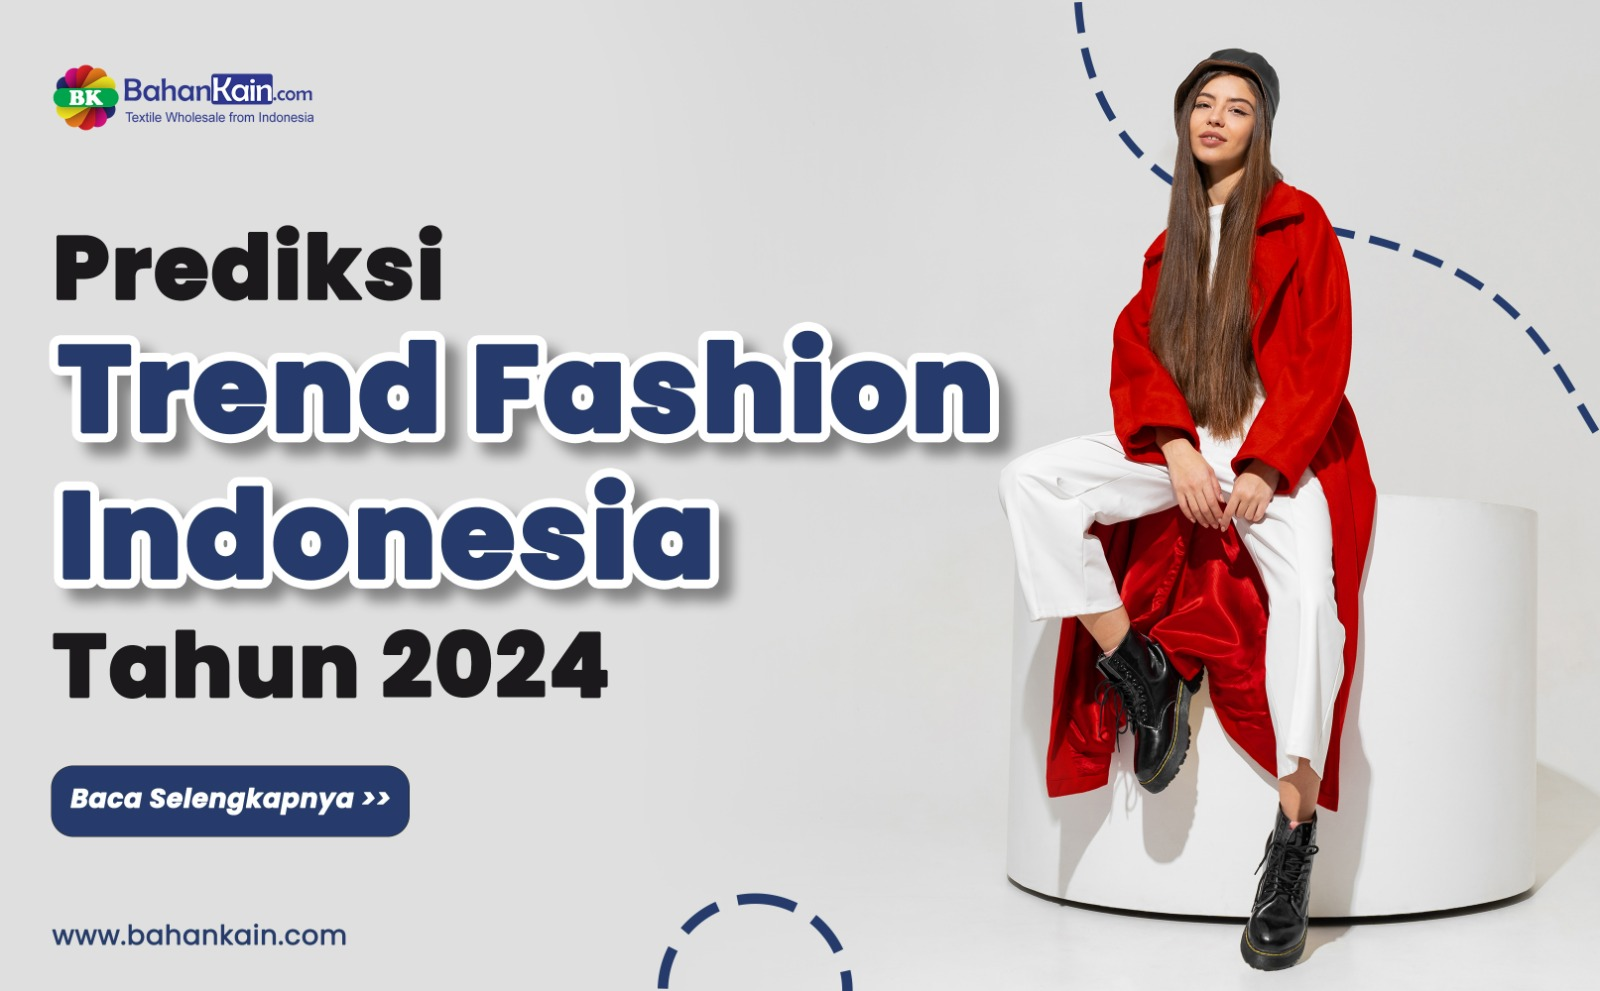 Prediksi Trend Fashion Indonesia Tahun 2024 